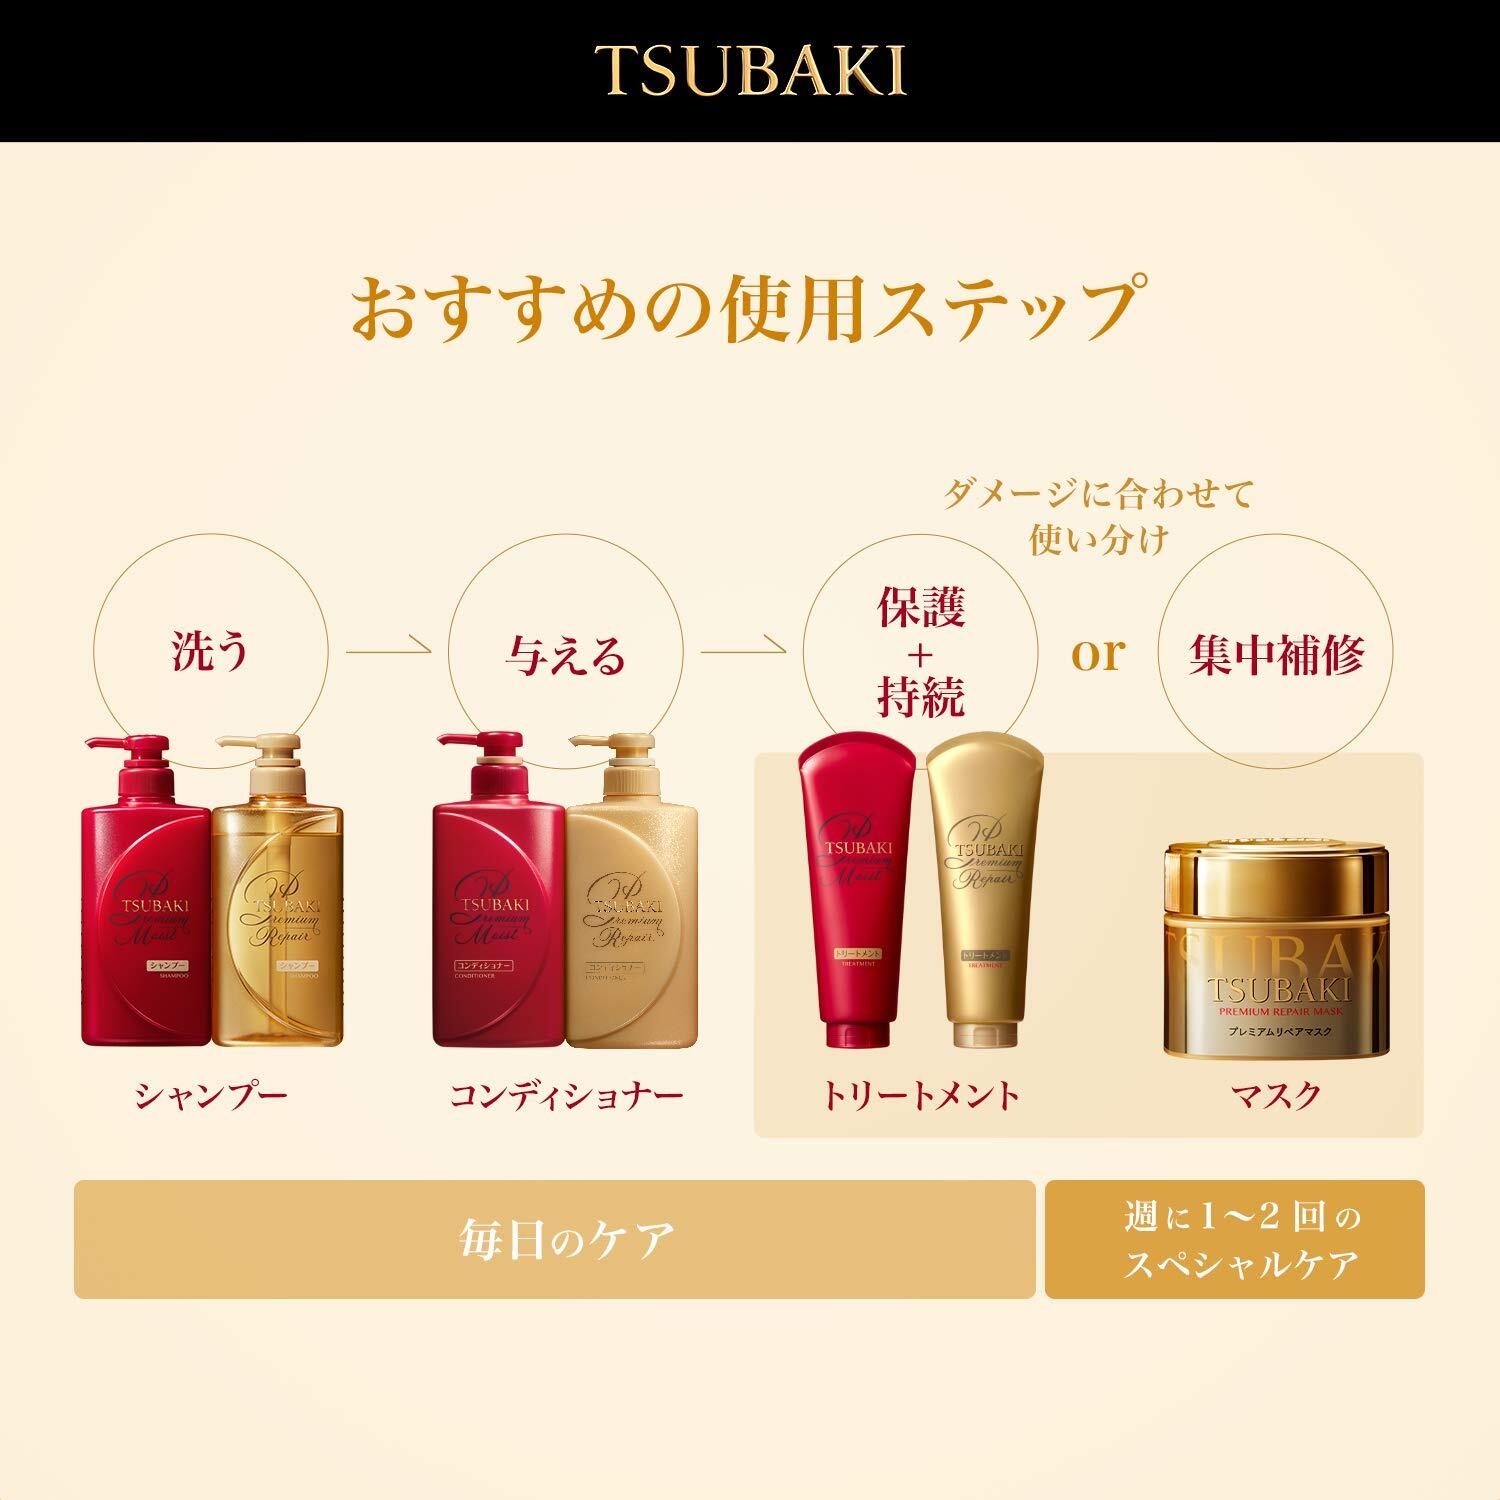 Shiseido Tsubaki Premium Moist Hair Treatment 180g